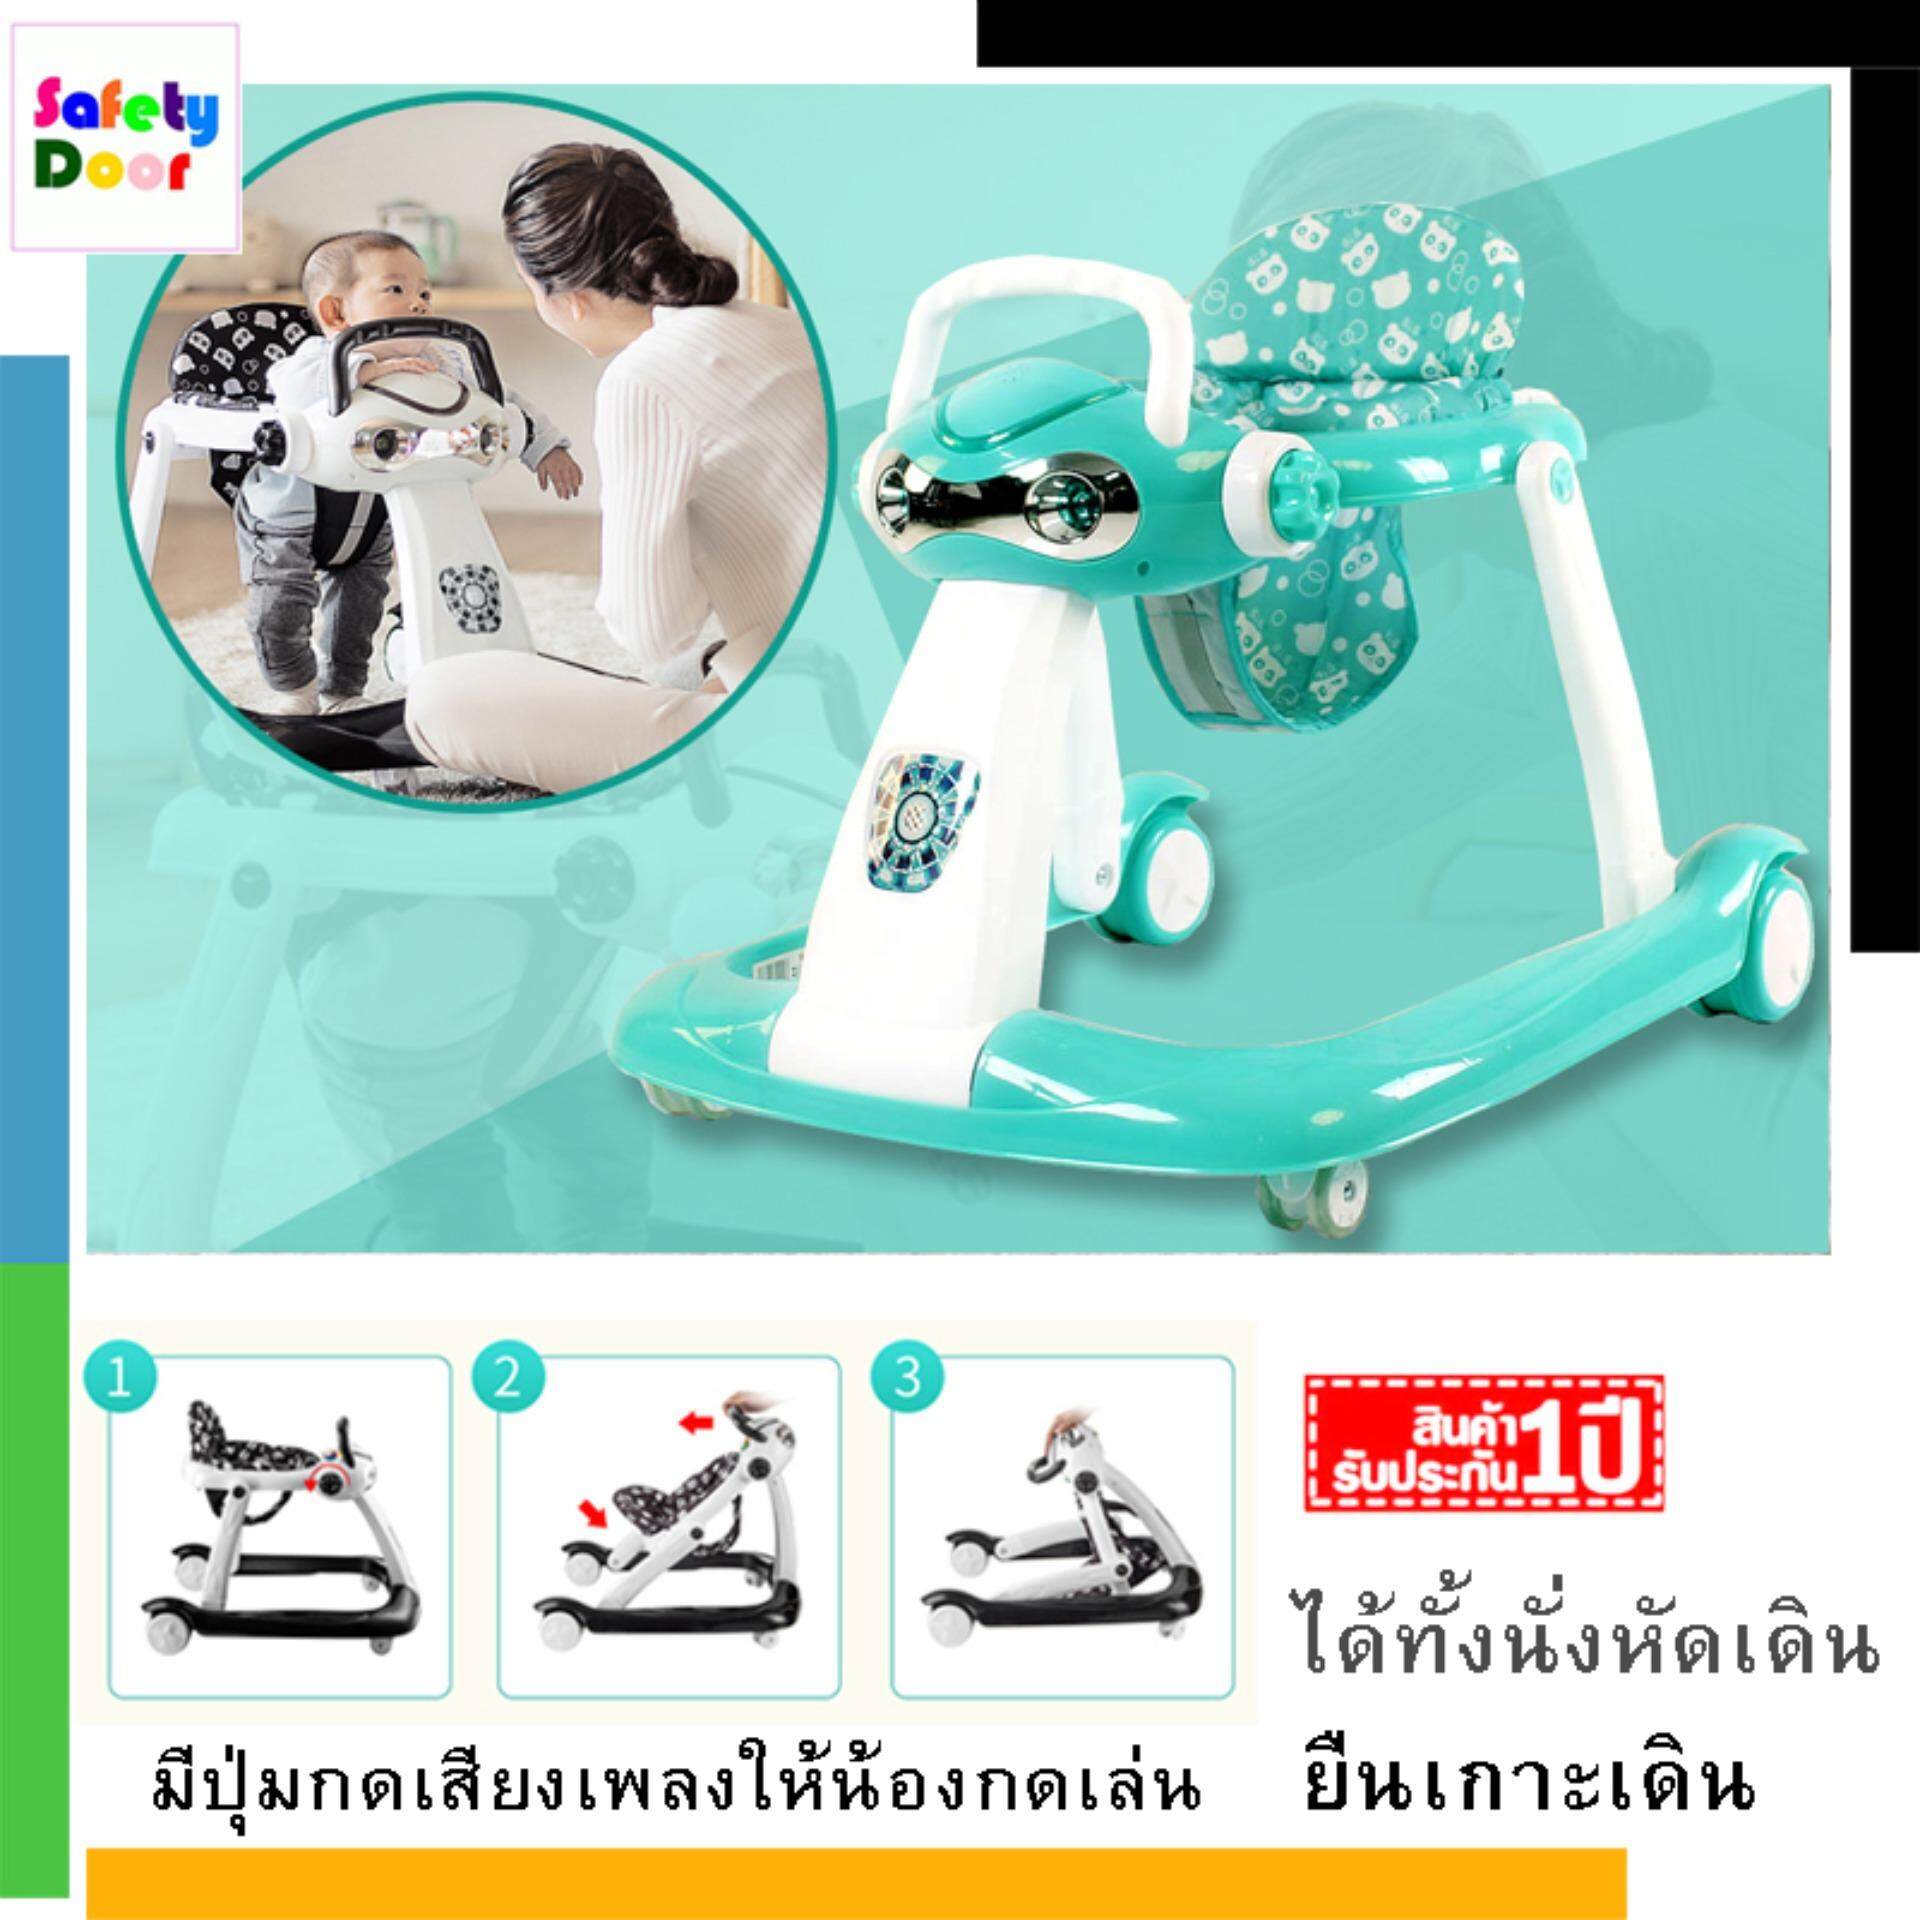 Baby walker รถหัดเดิน รถผลักเดิน 2in1 มีเสียงดนตรี และของเล่น ปรับเป็นแบบนั่ง หรือแบบผลักเดินได้ (สีขาว/เขียว)